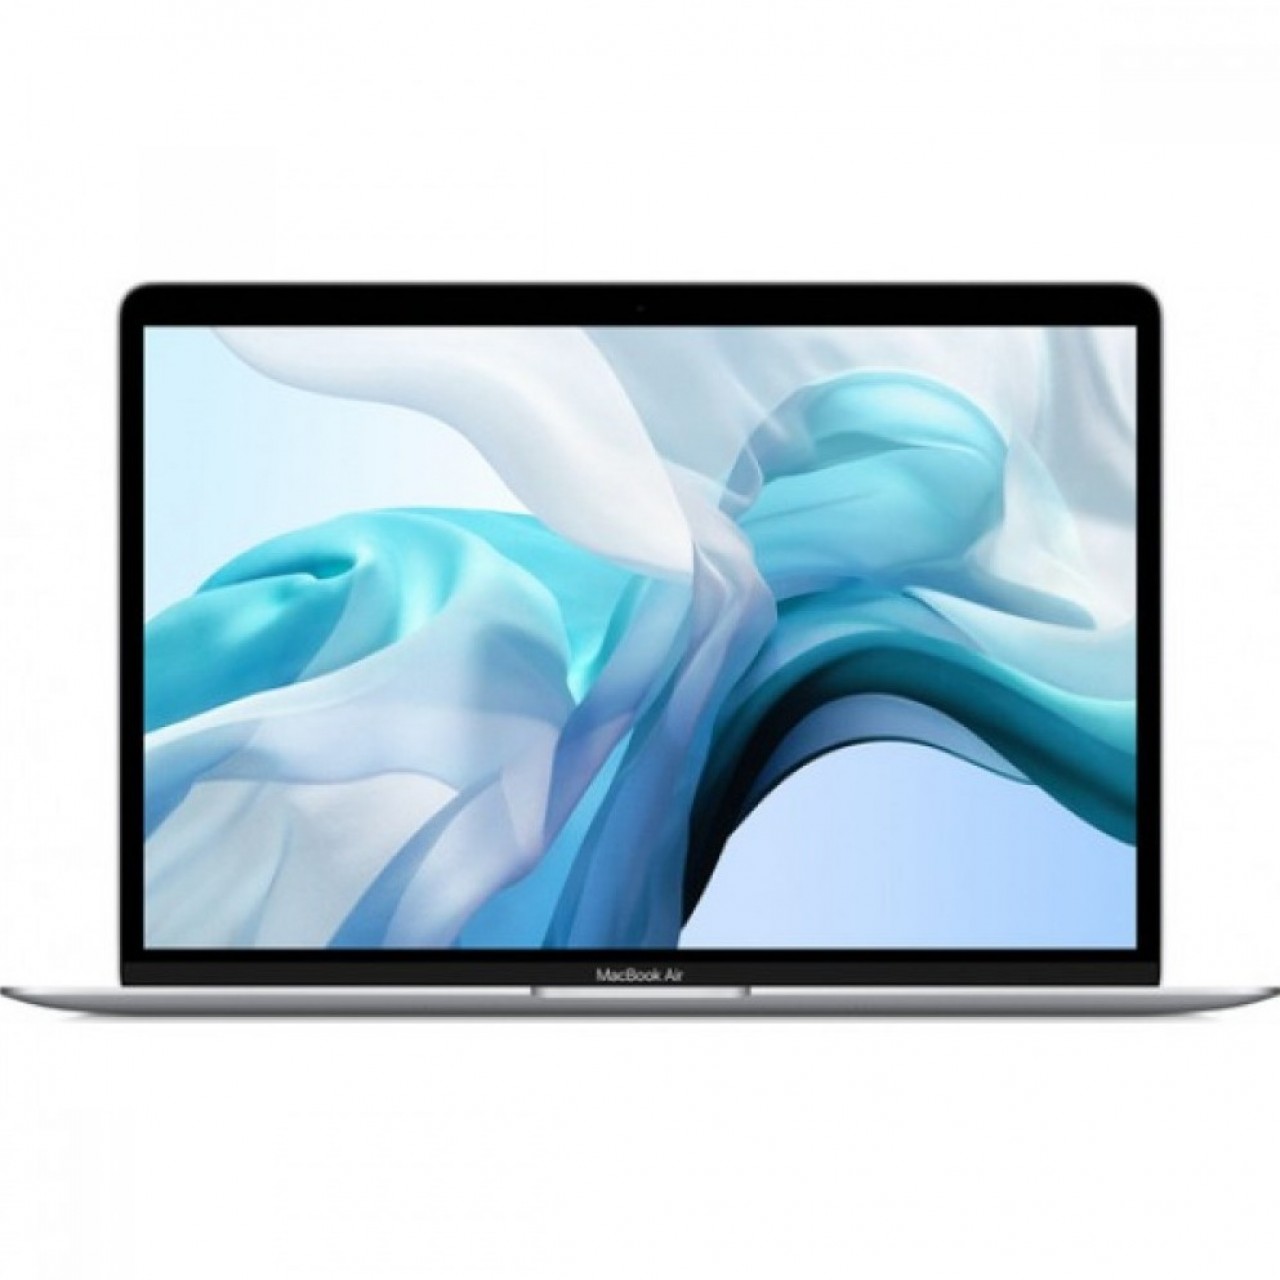 Apple Mac Book Air MREC2 - 13.3 Inch Display - 8th Generation Core i5 2018